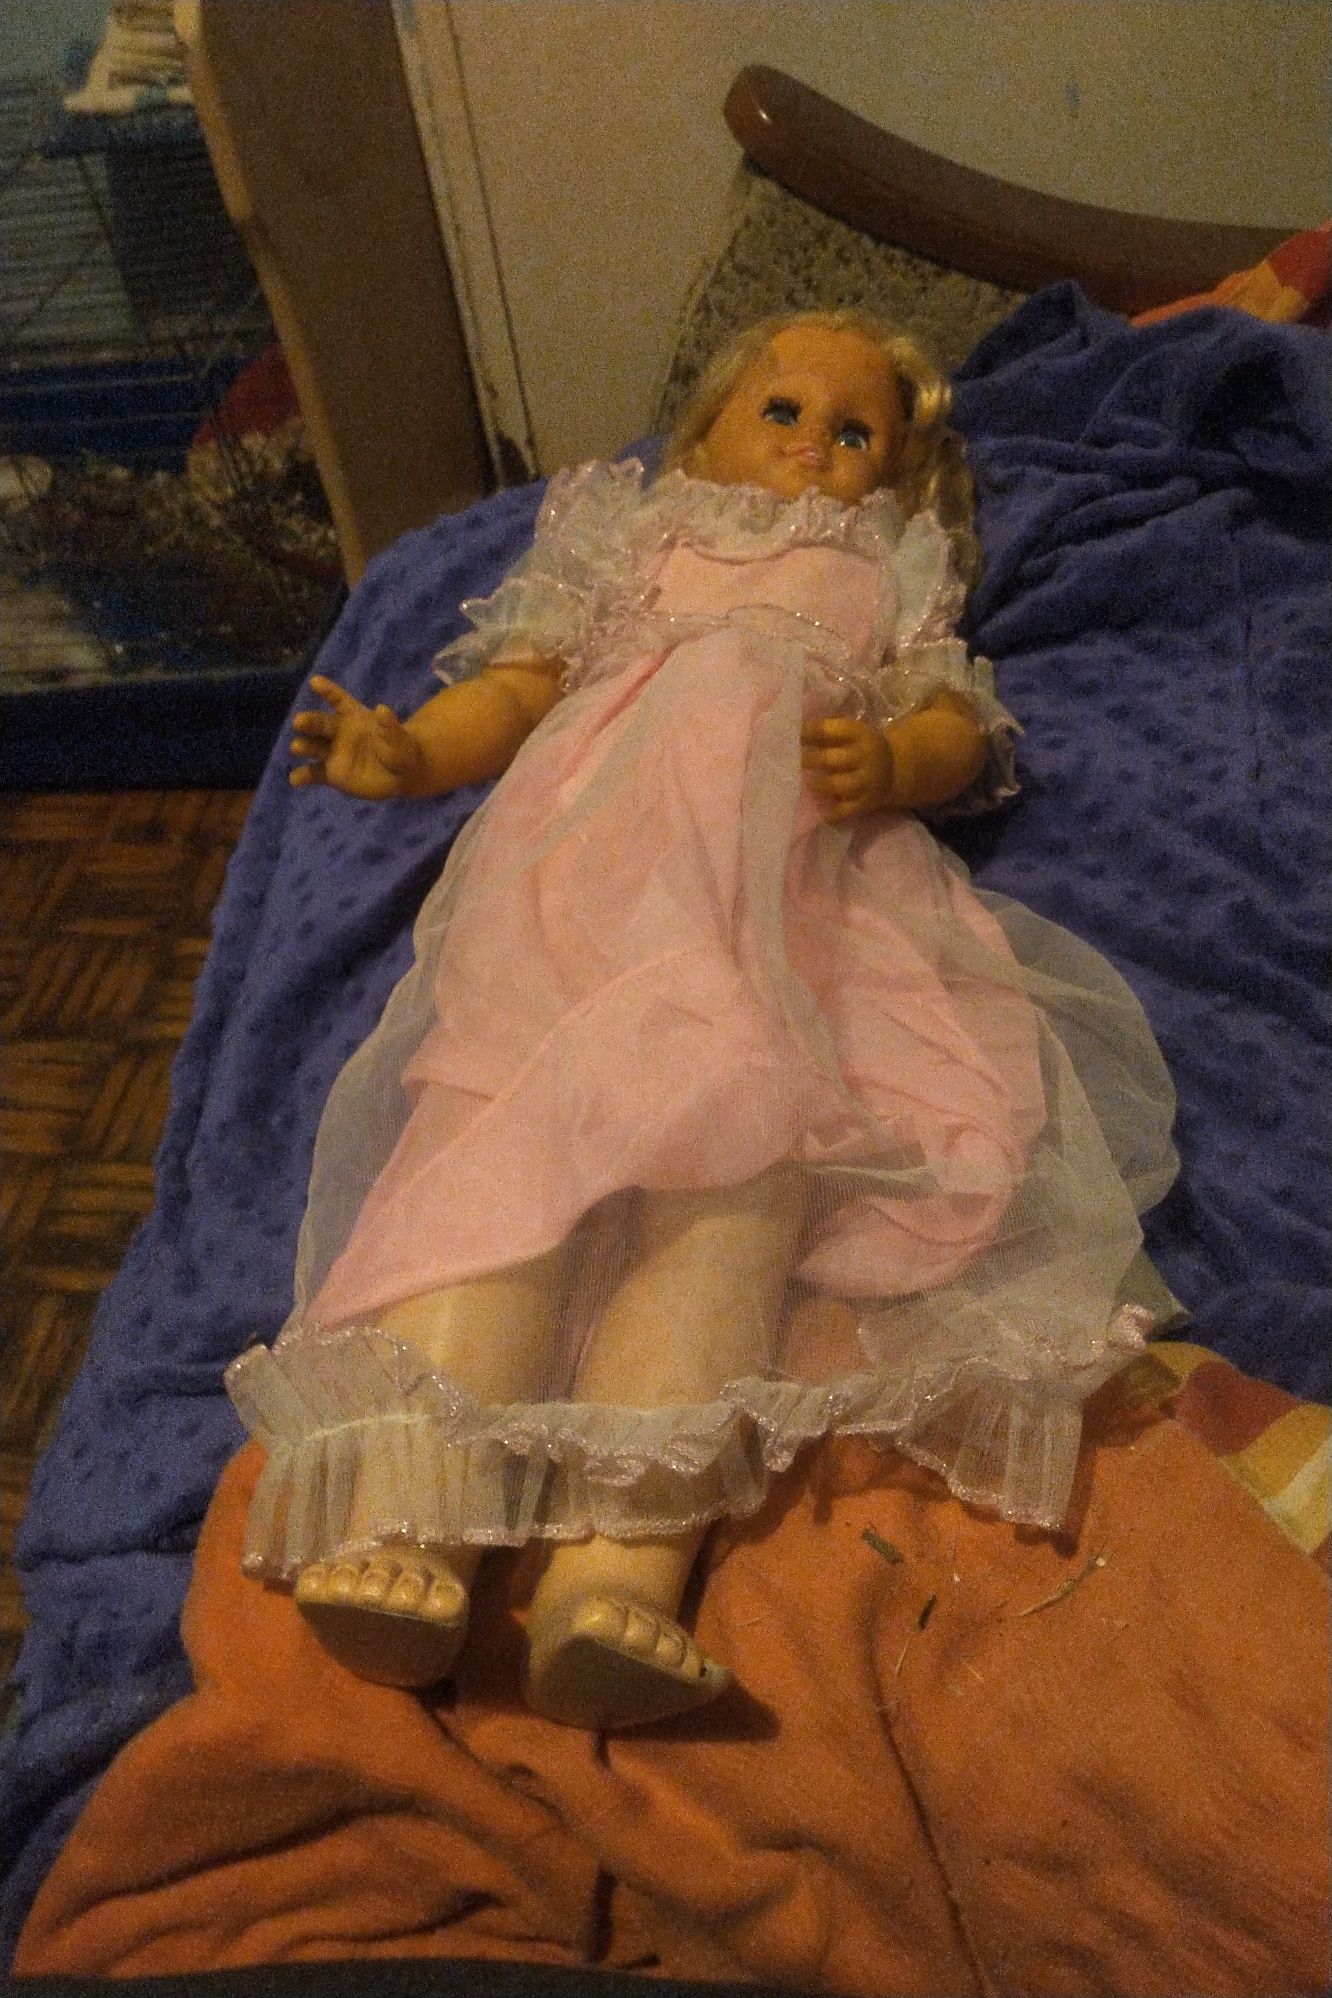 Stara zabytkowa lalka